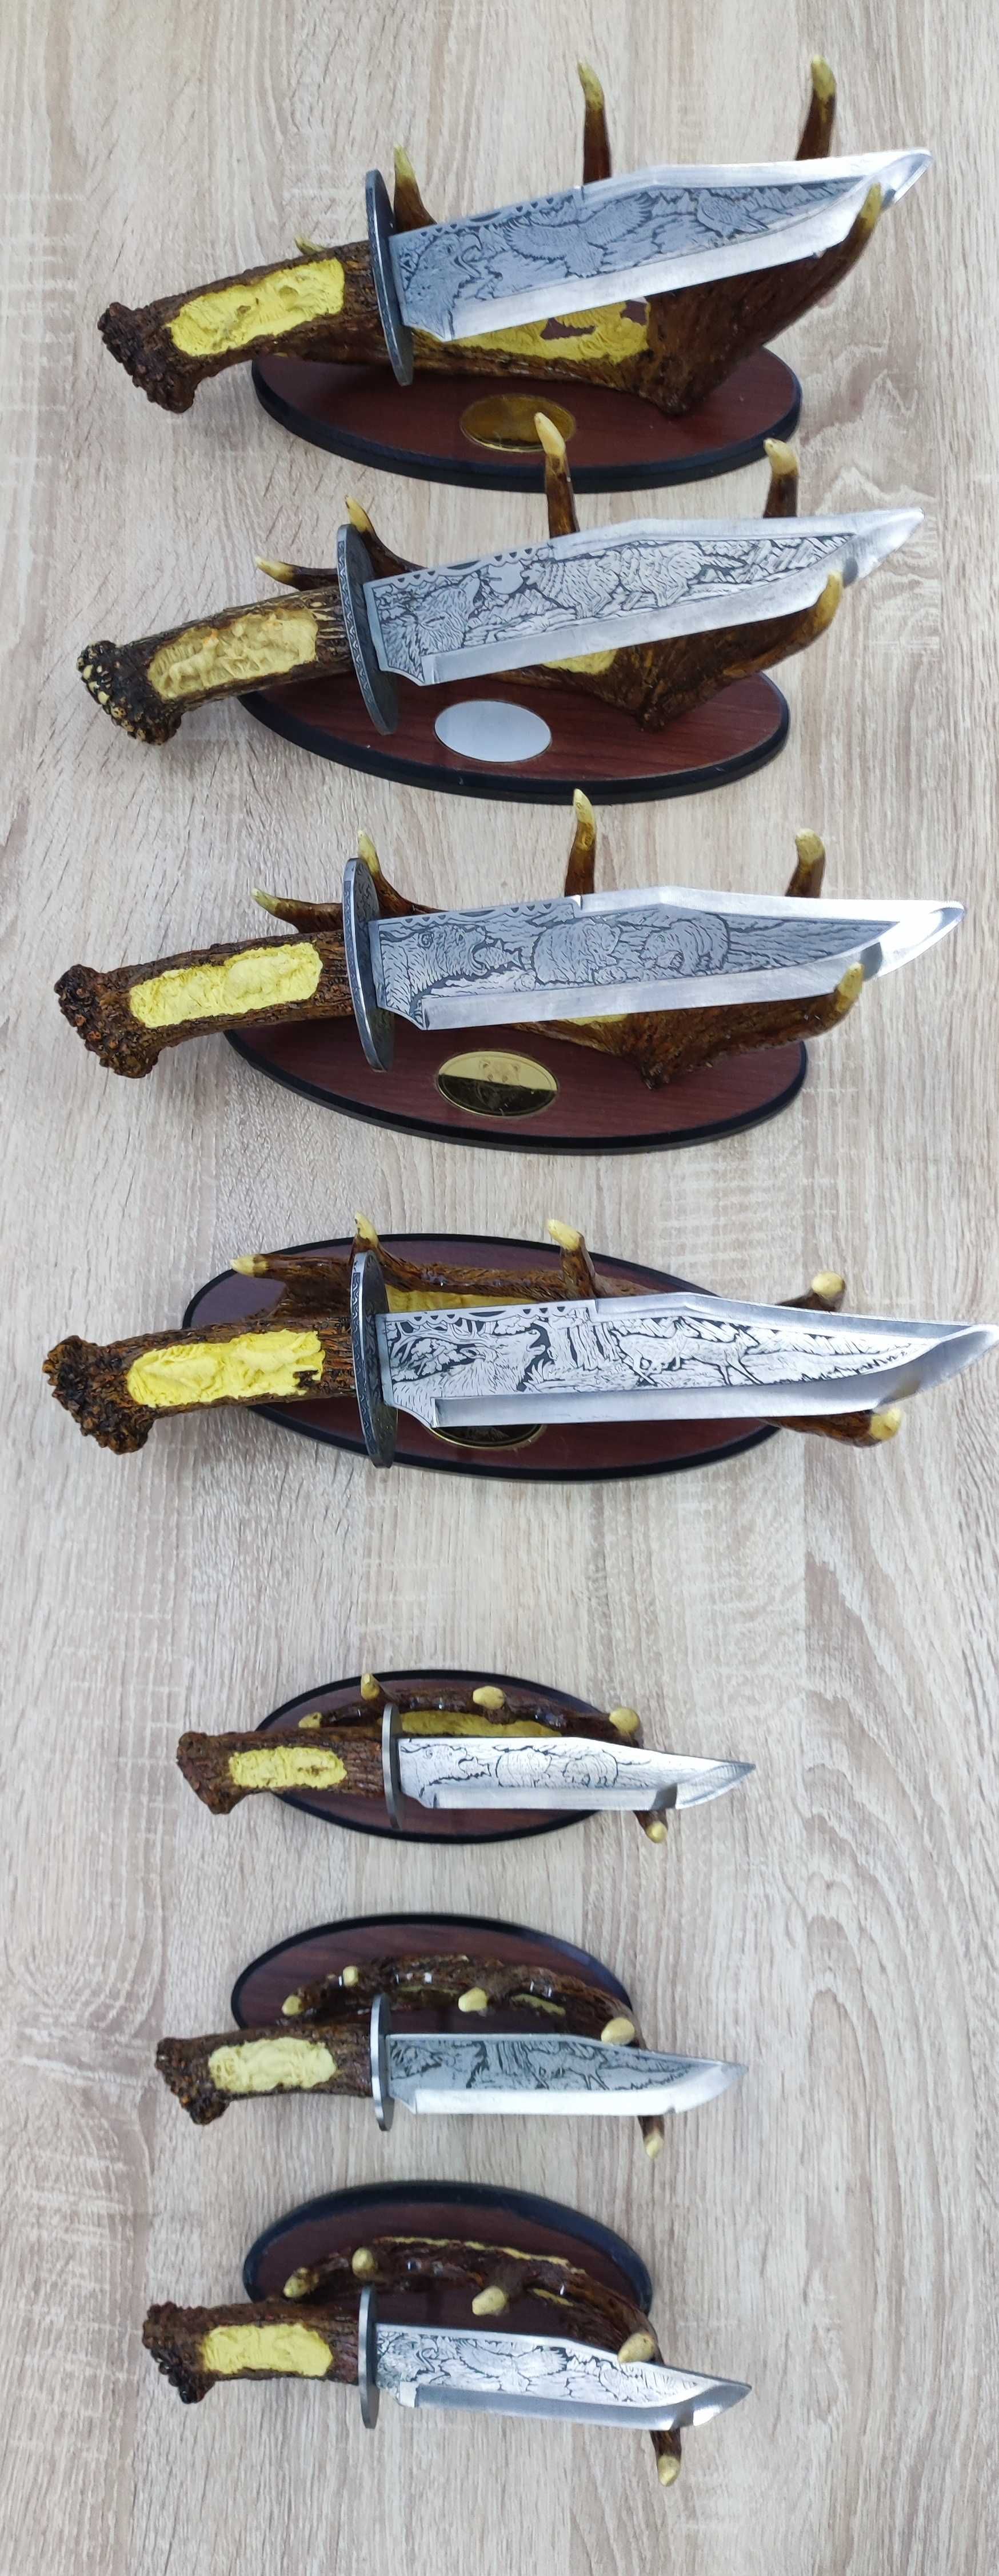 Колекционерски ножове, сувенирен подарък за ловци и рибари